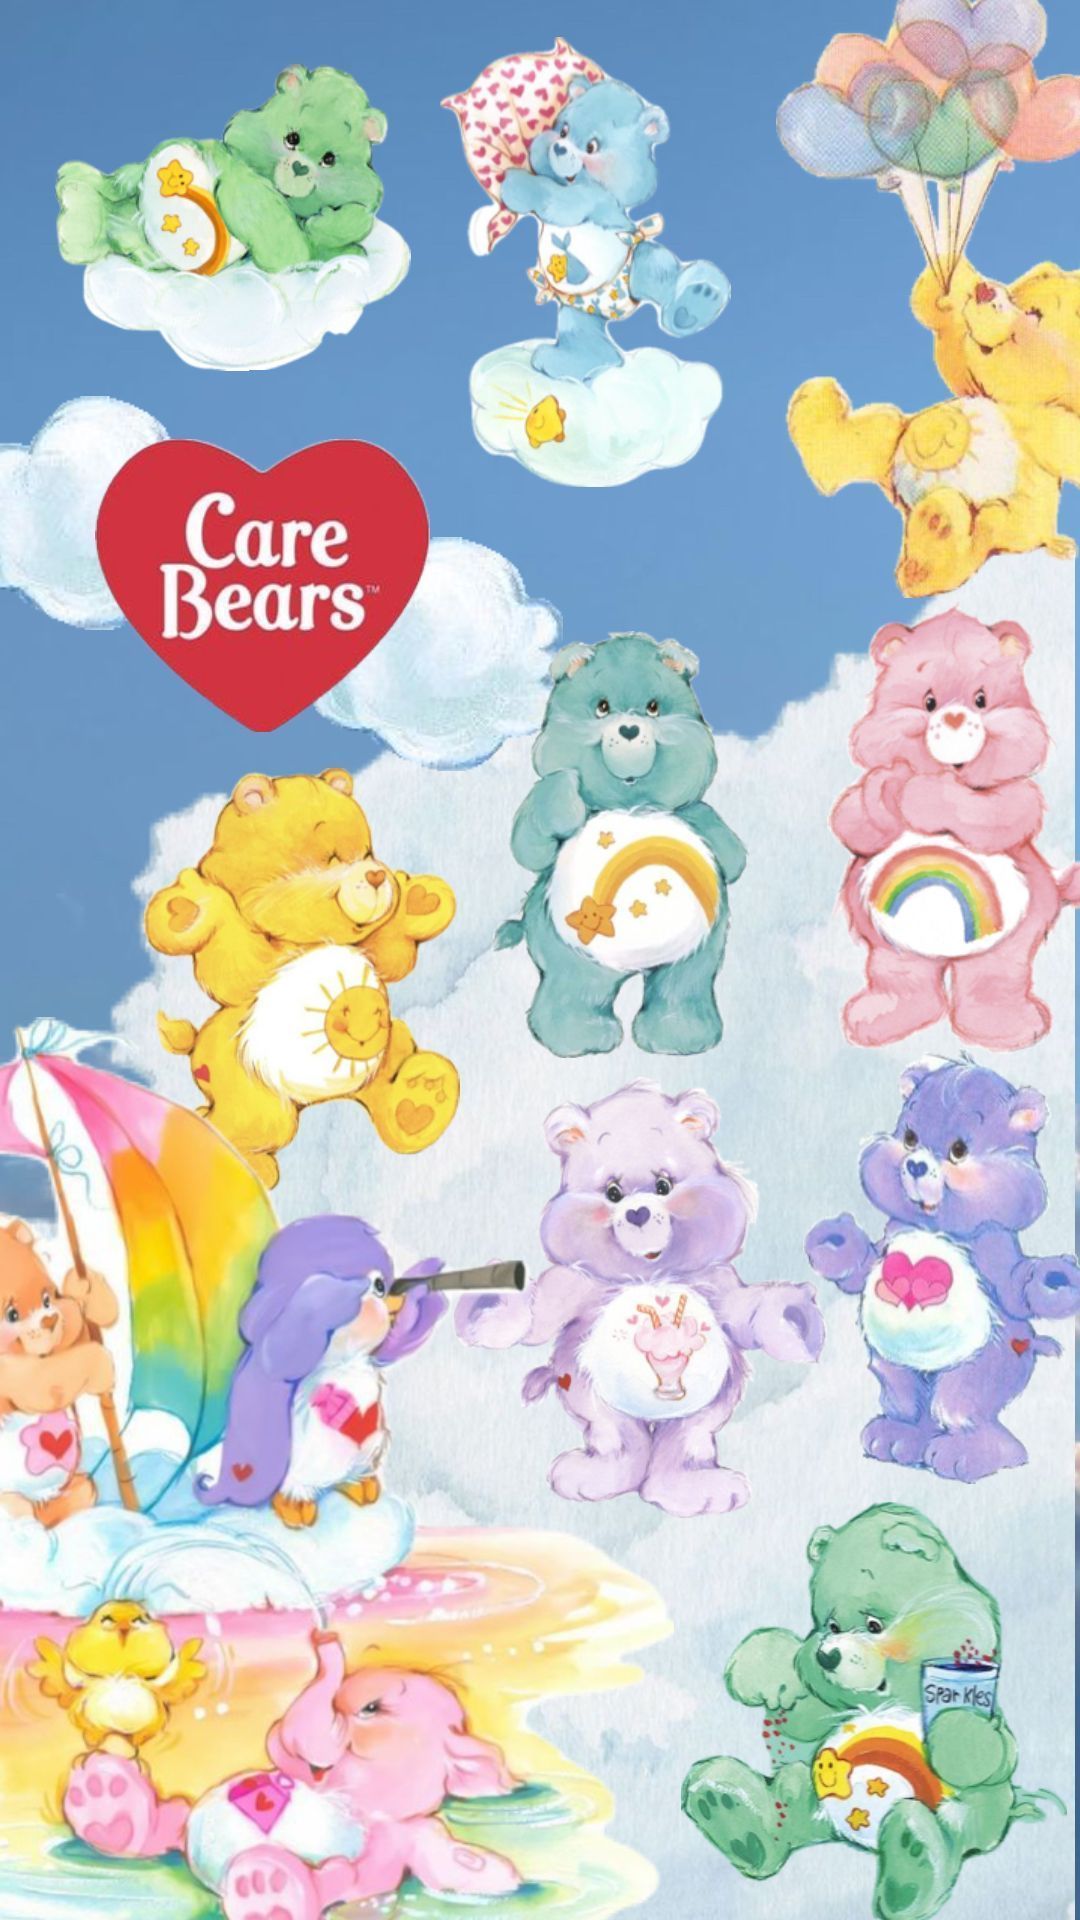 #carebears #bears s #wallpaper #wallpaper #wallpaper #wallpapercollage